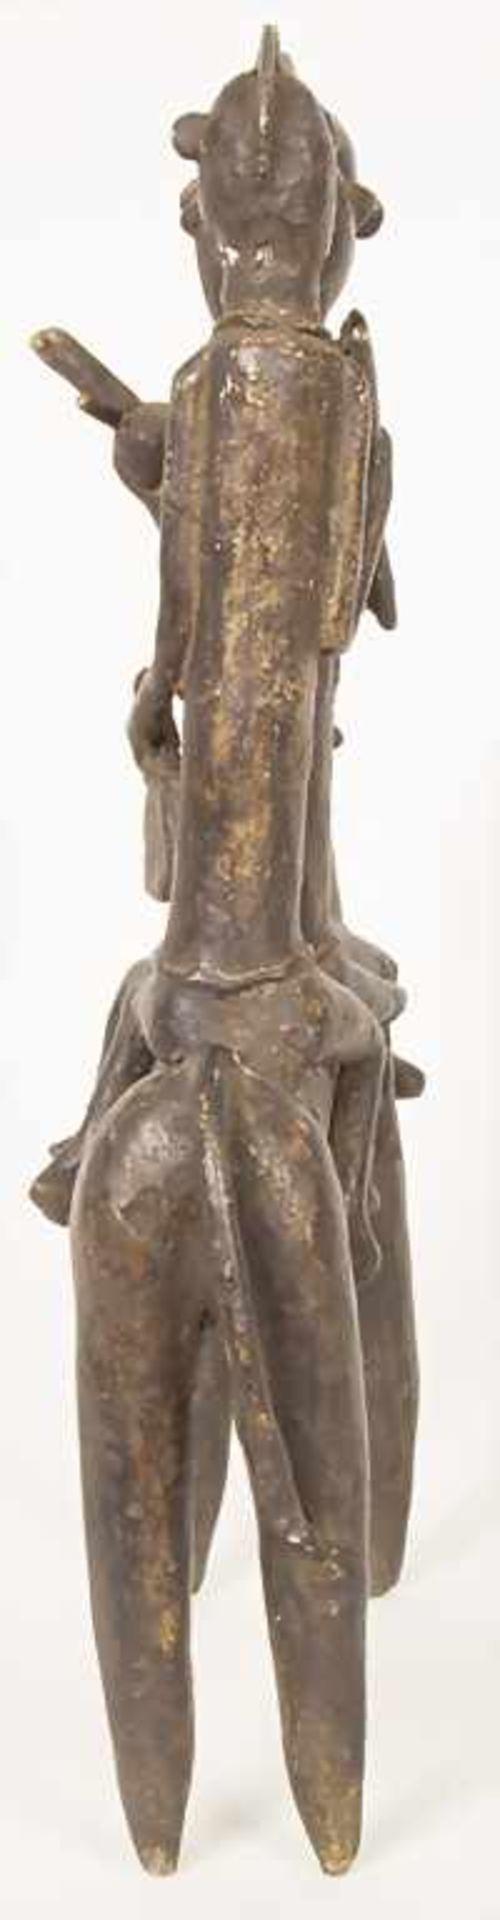 Reiterfigur, Kotoko, Tschad, 2. Hälfte 20. Jh.Material: Bronze, braun patiniert,Höhe: 45,5 cm, - Image 4 of 5